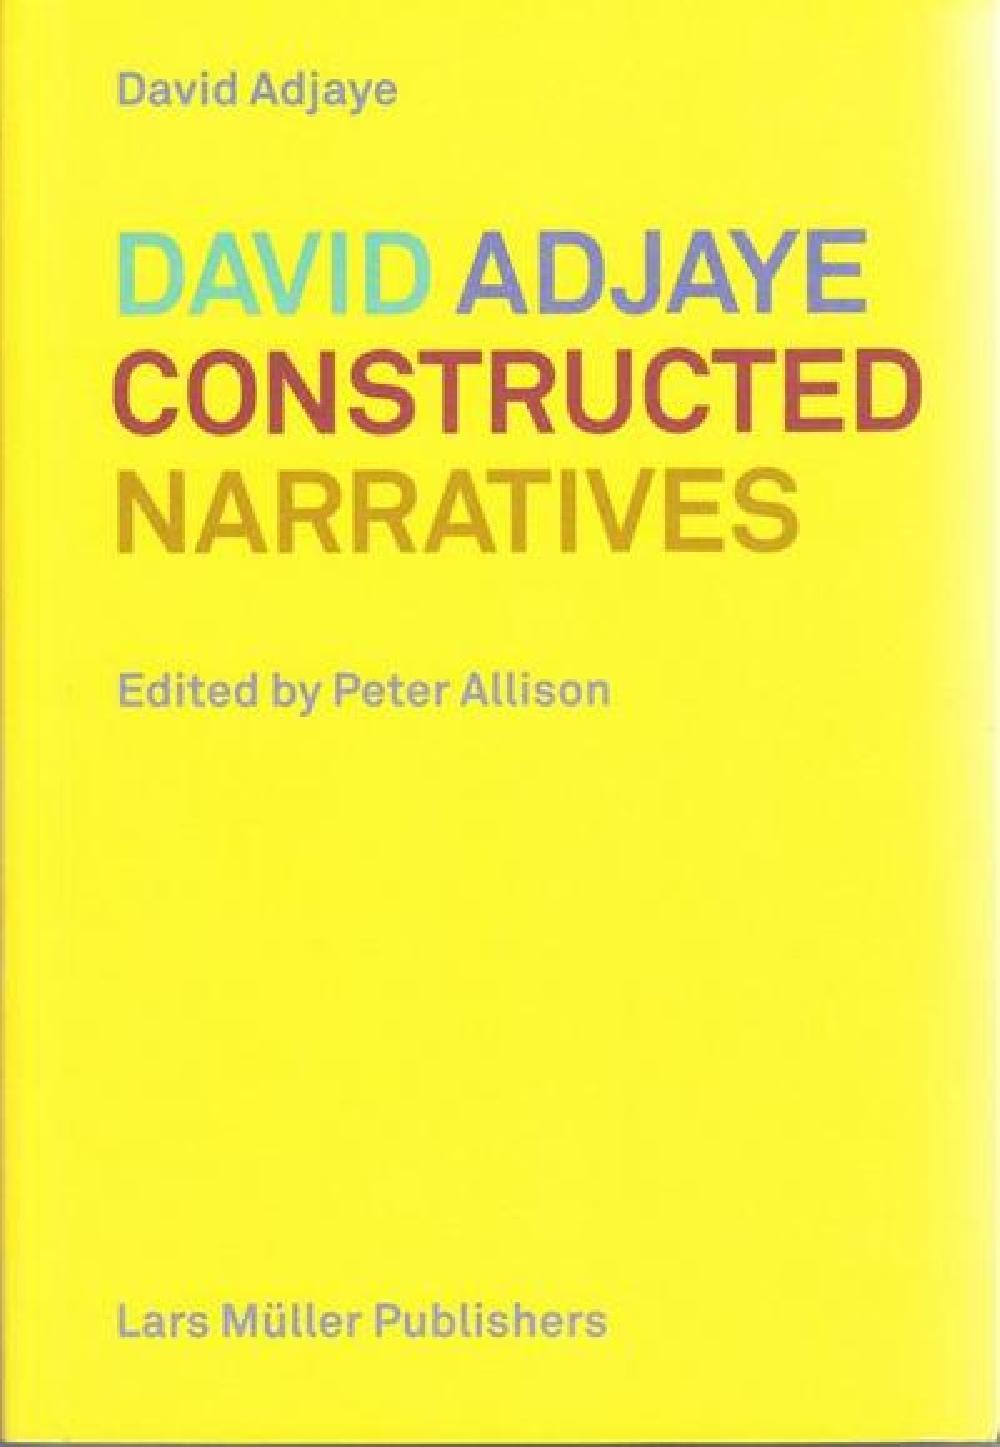 Constructed narratives